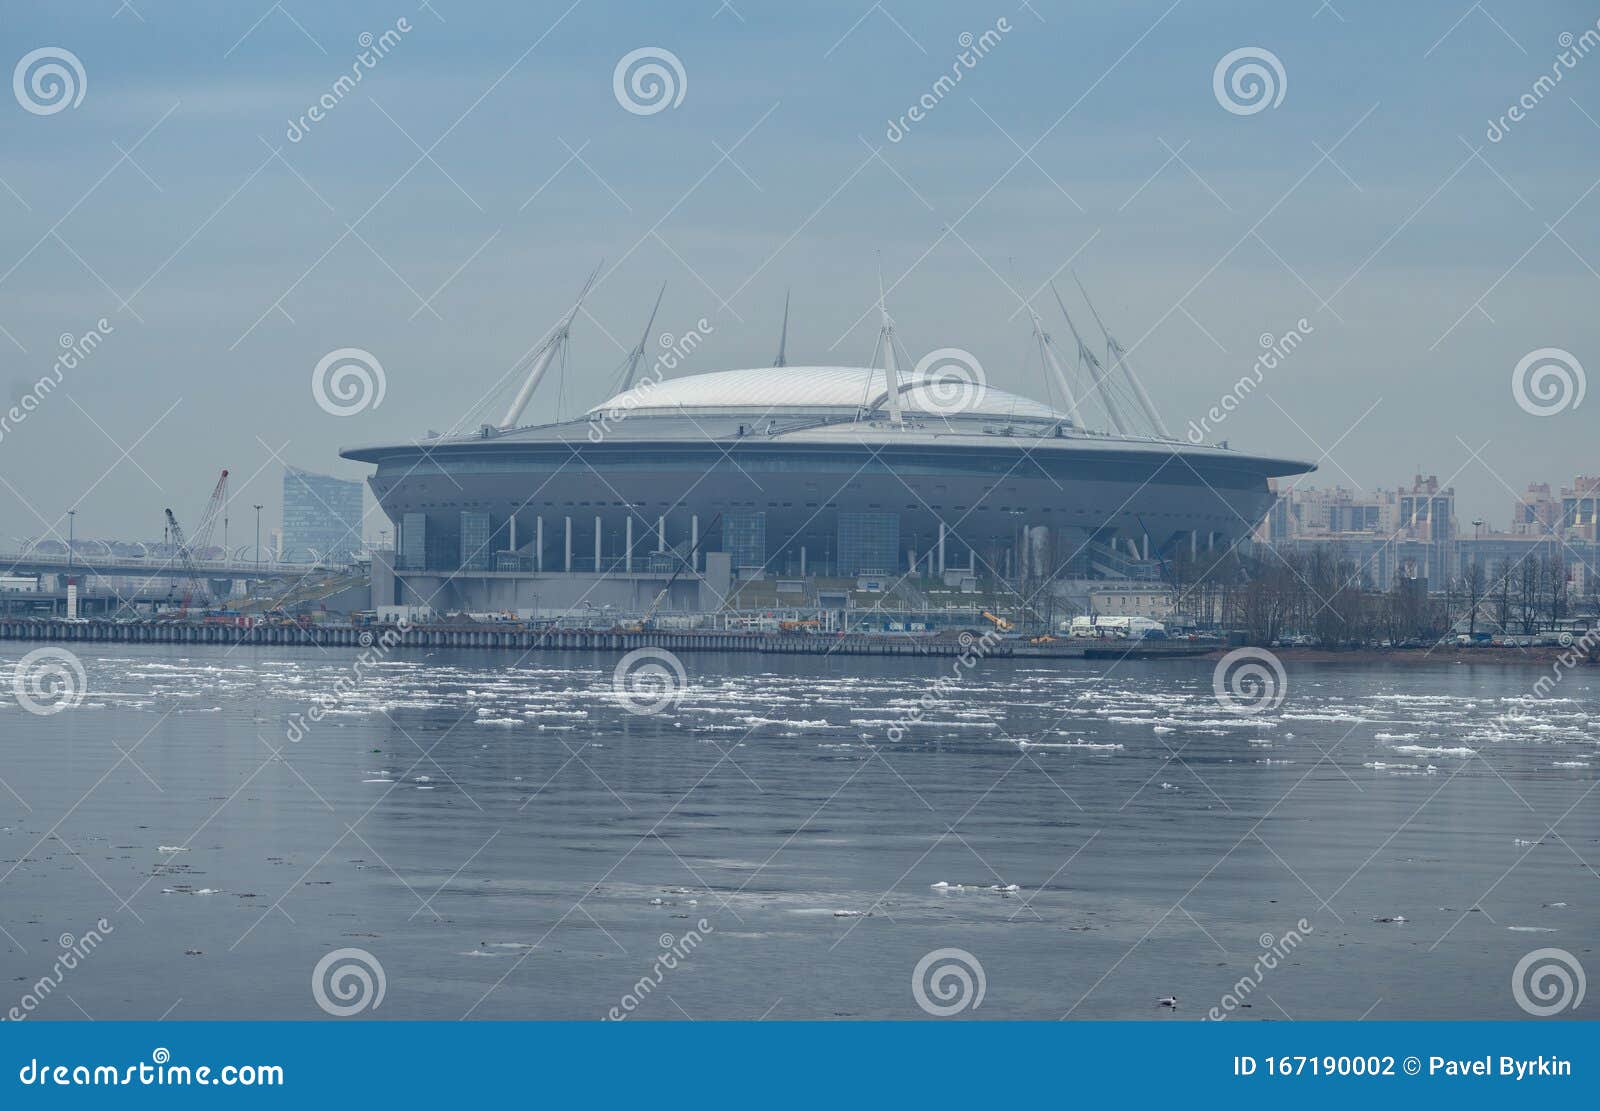 Krestovsky stadium